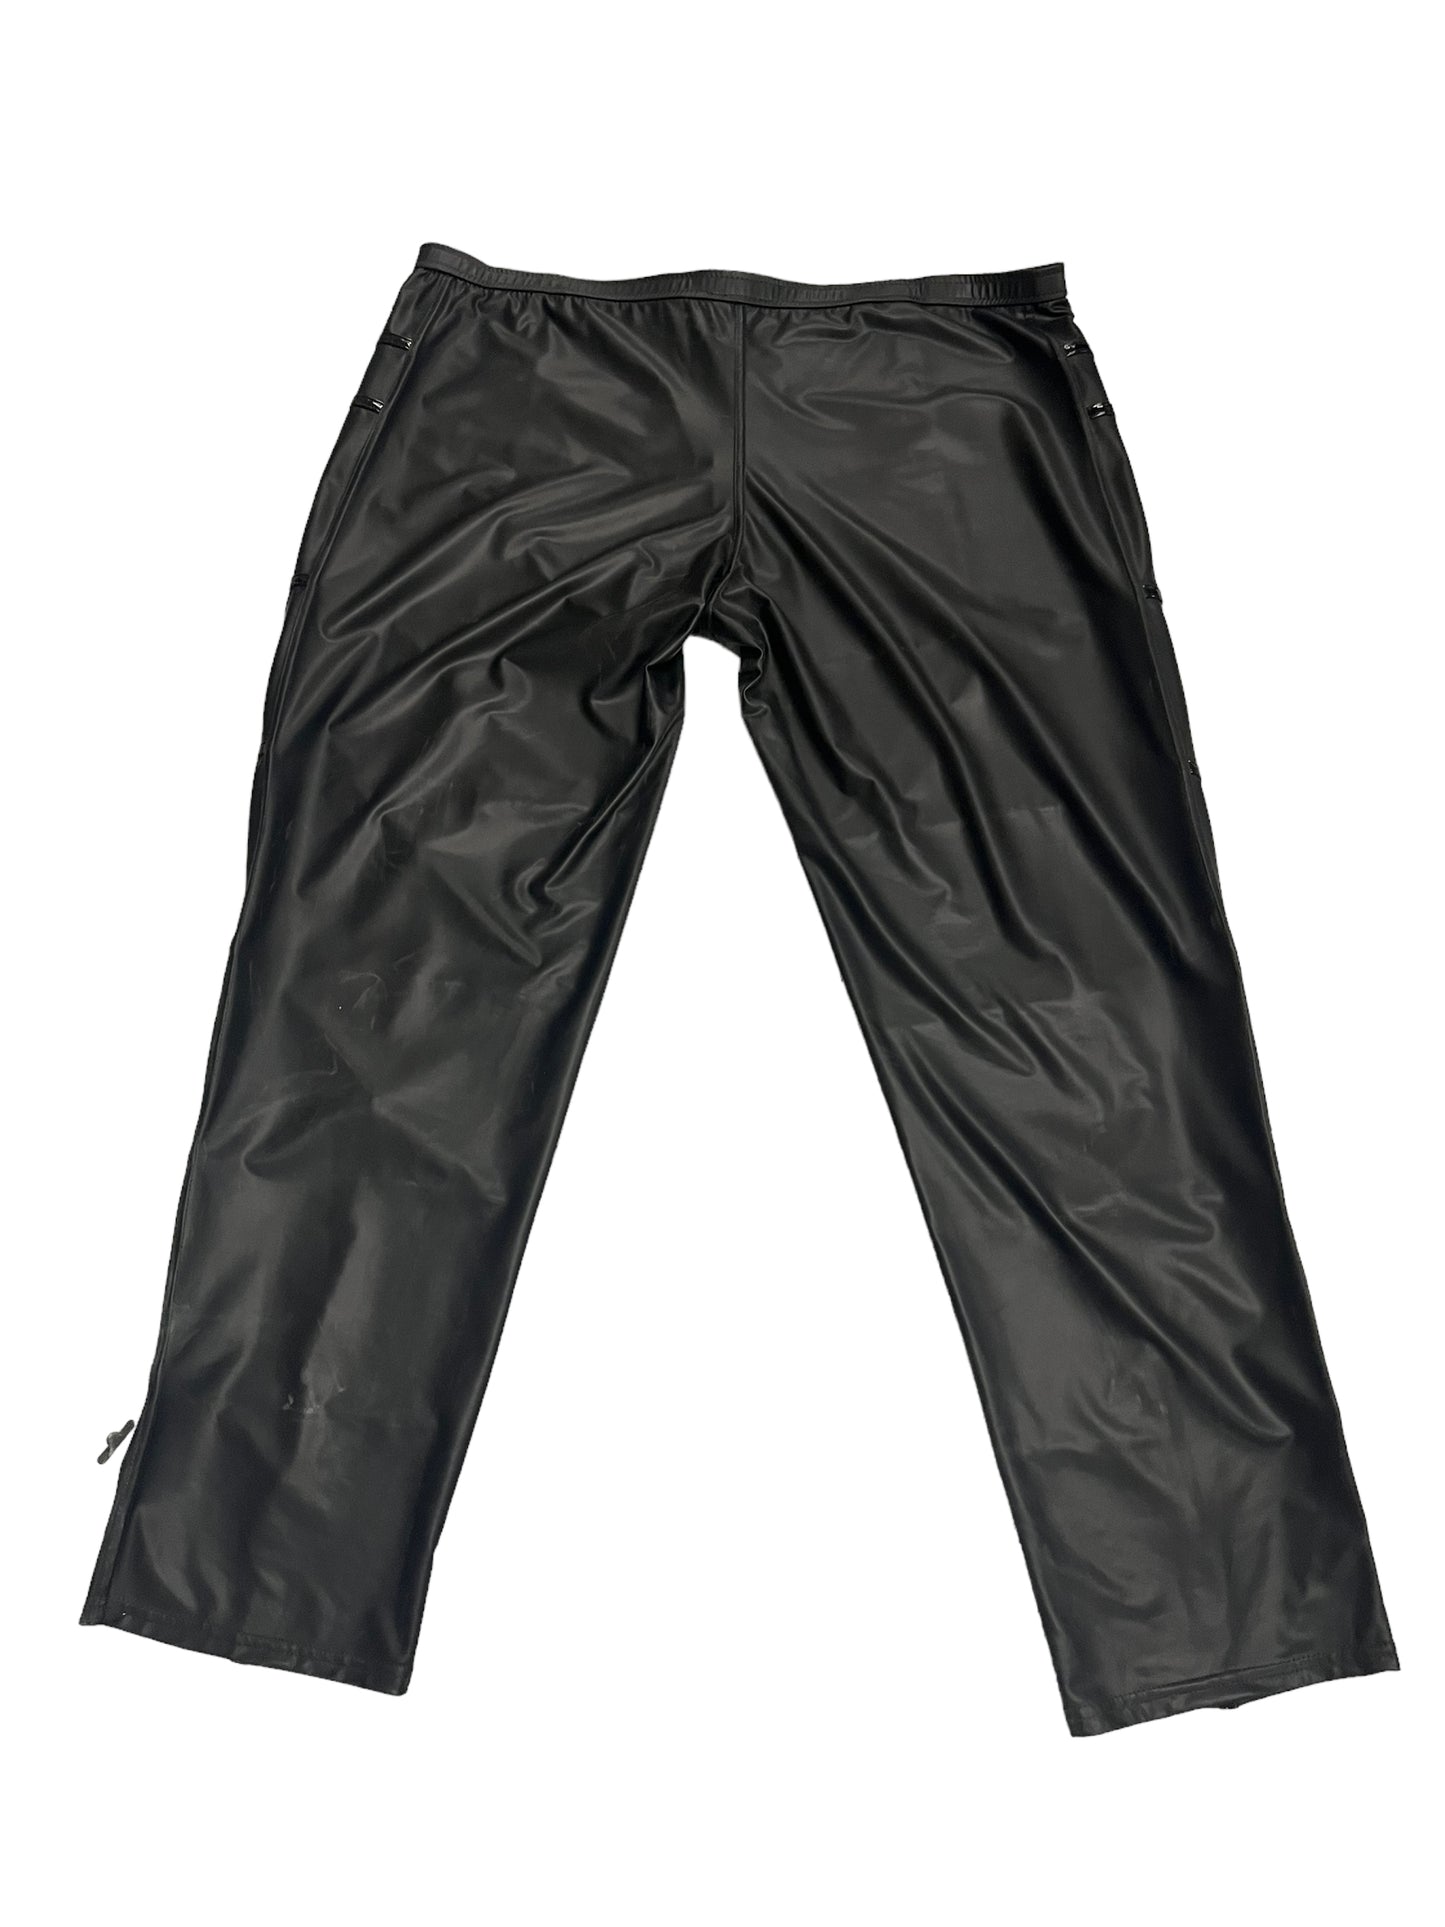 Noir - LL81 - Black Long Pants With Patterns - Size M